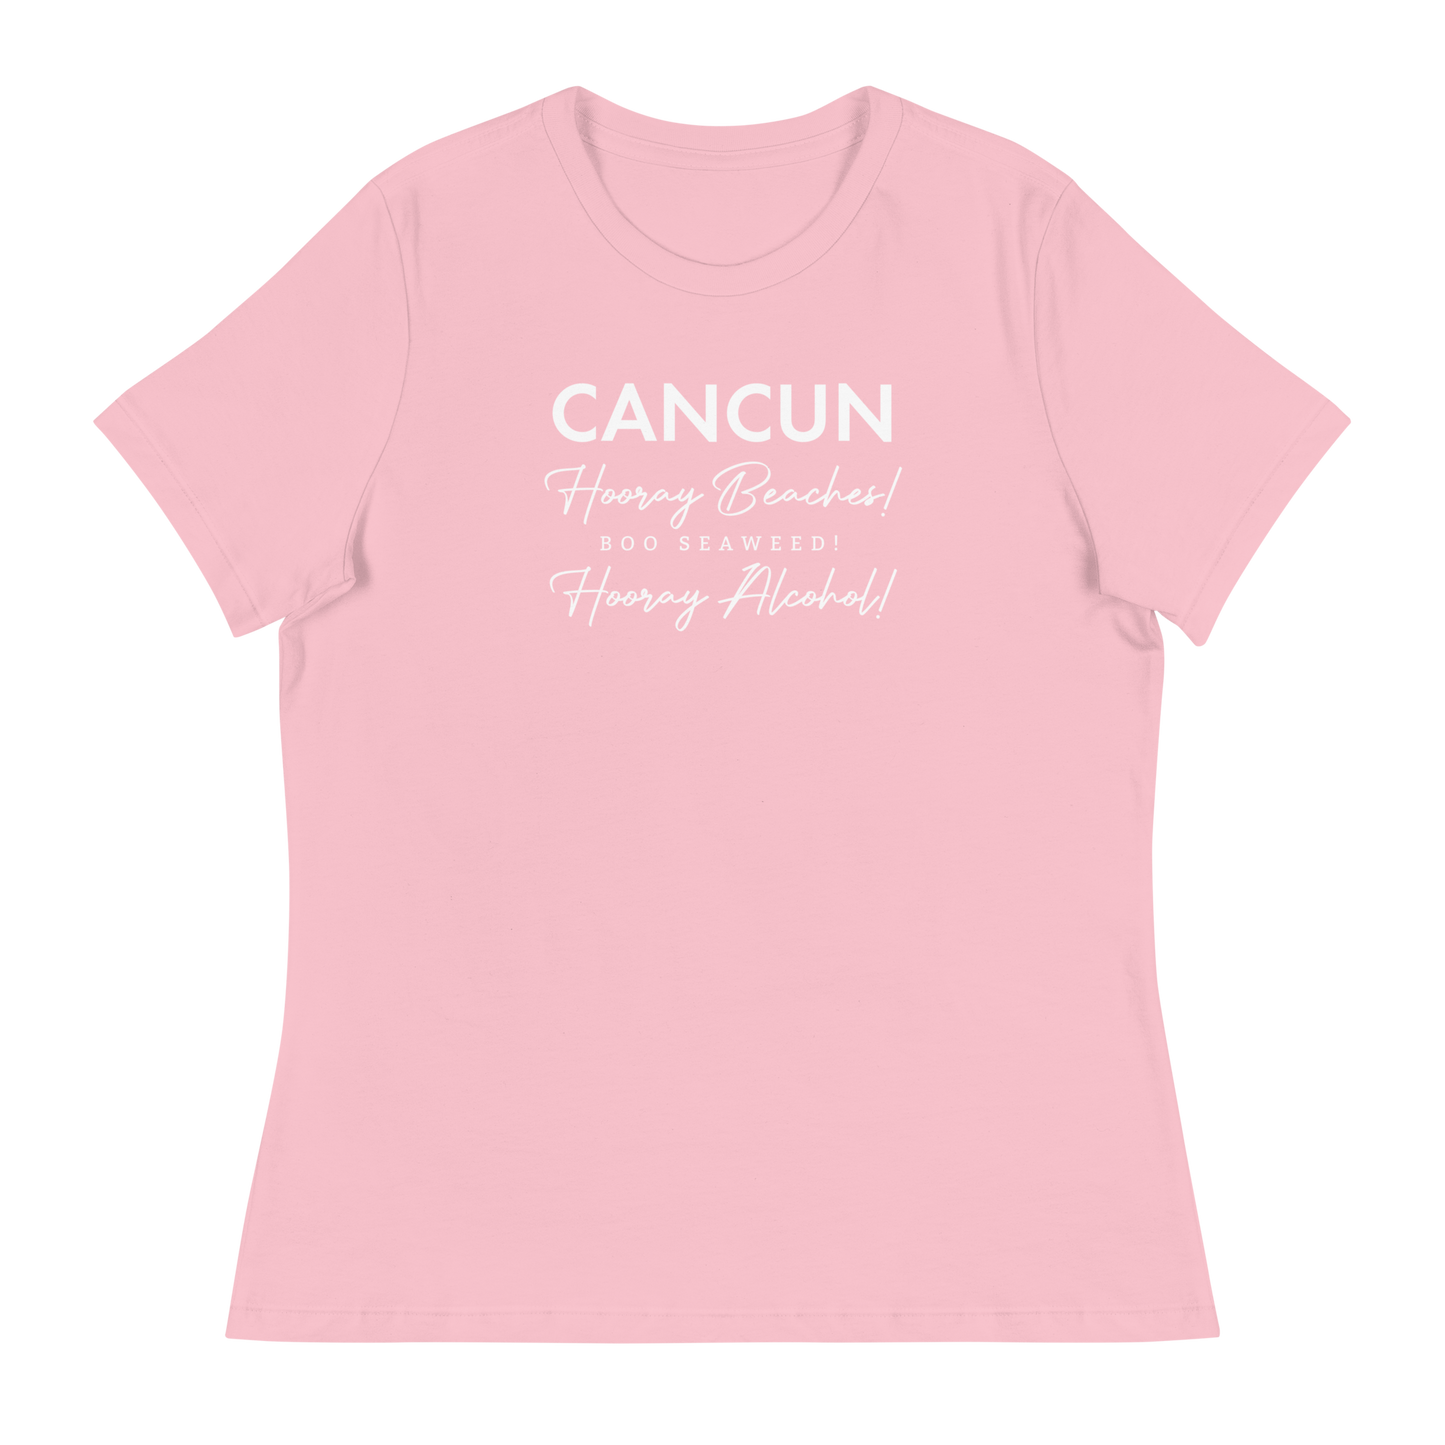 Women's - CANCUN - Hooray Beaches! BOO Seaweed! Hooray Alcohol! - Funny T-Shirt